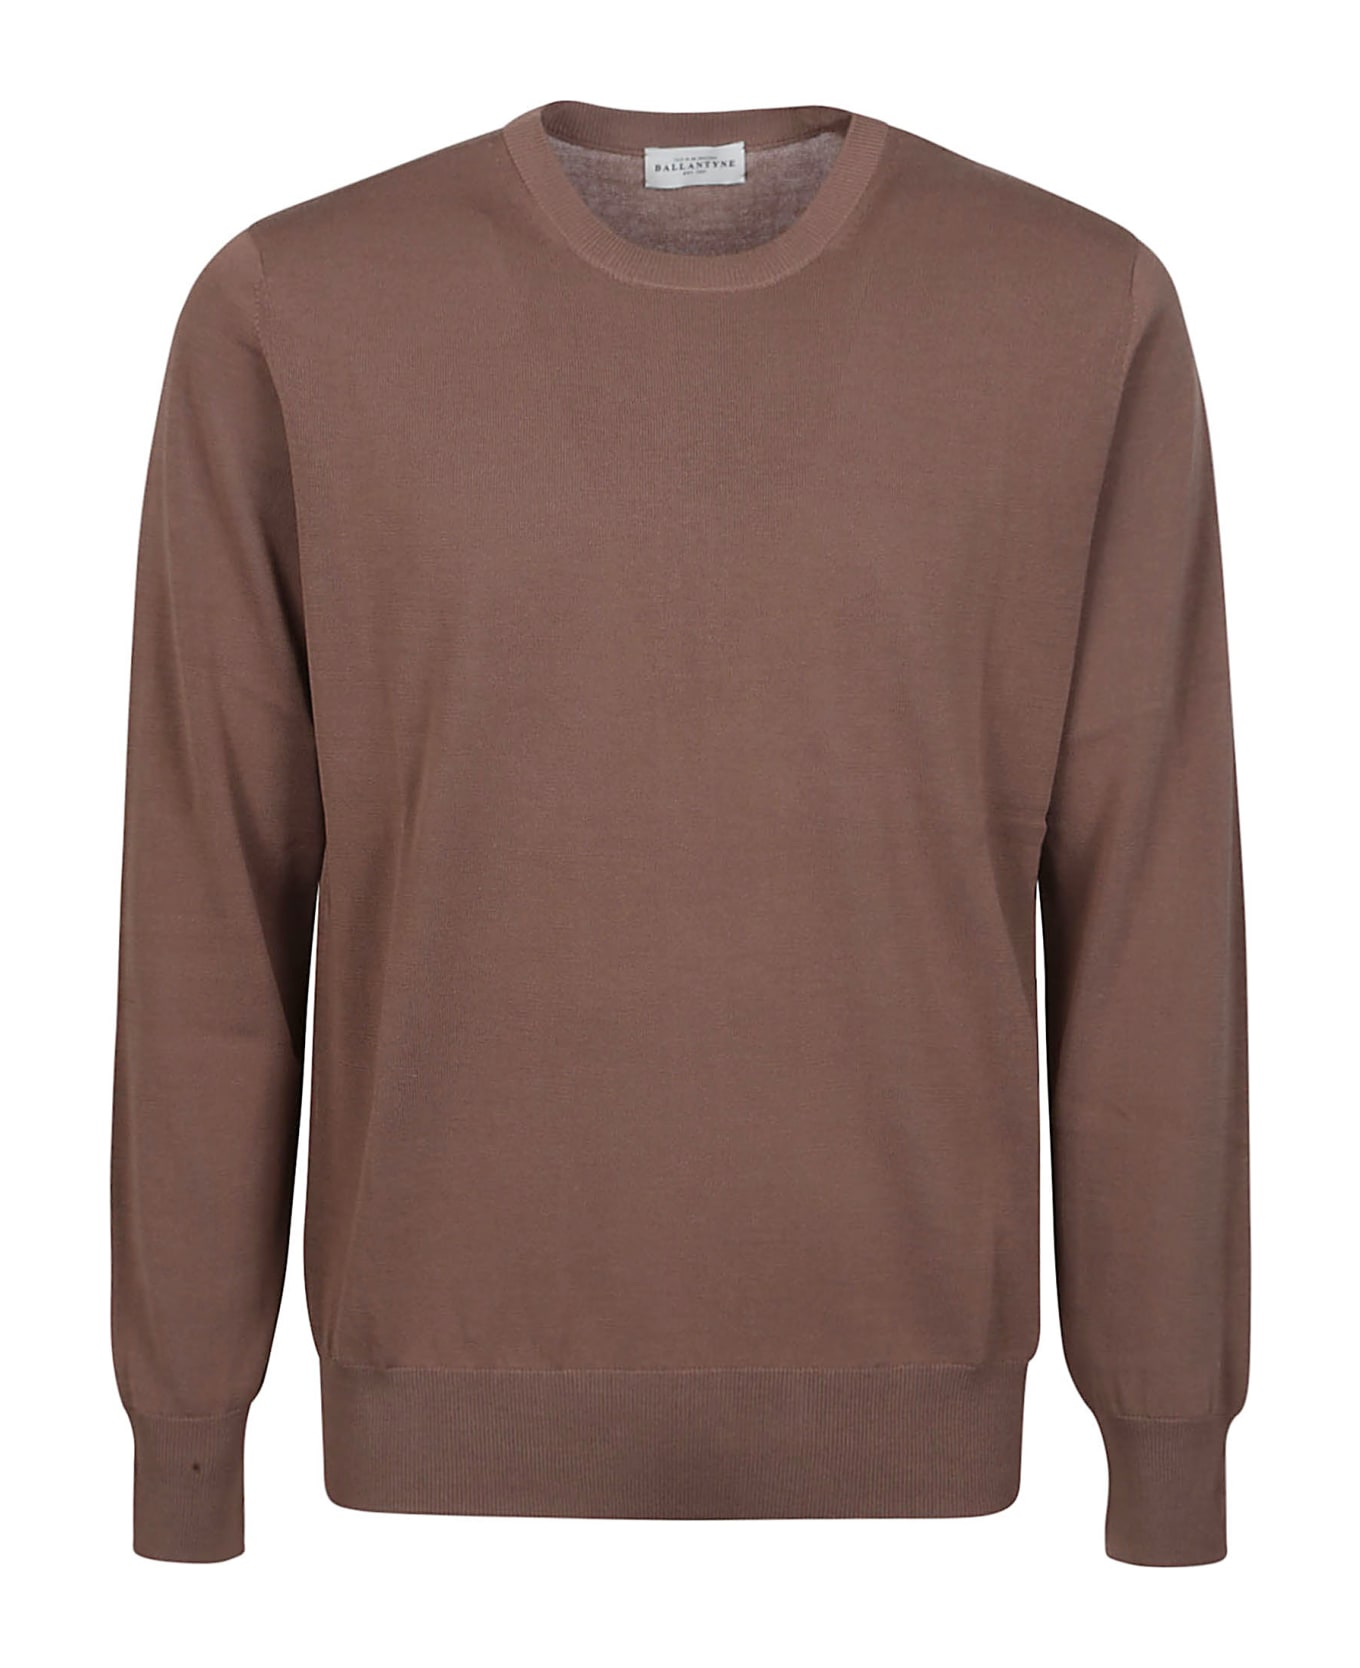 Ballantyne Plain Sweater - London Clay